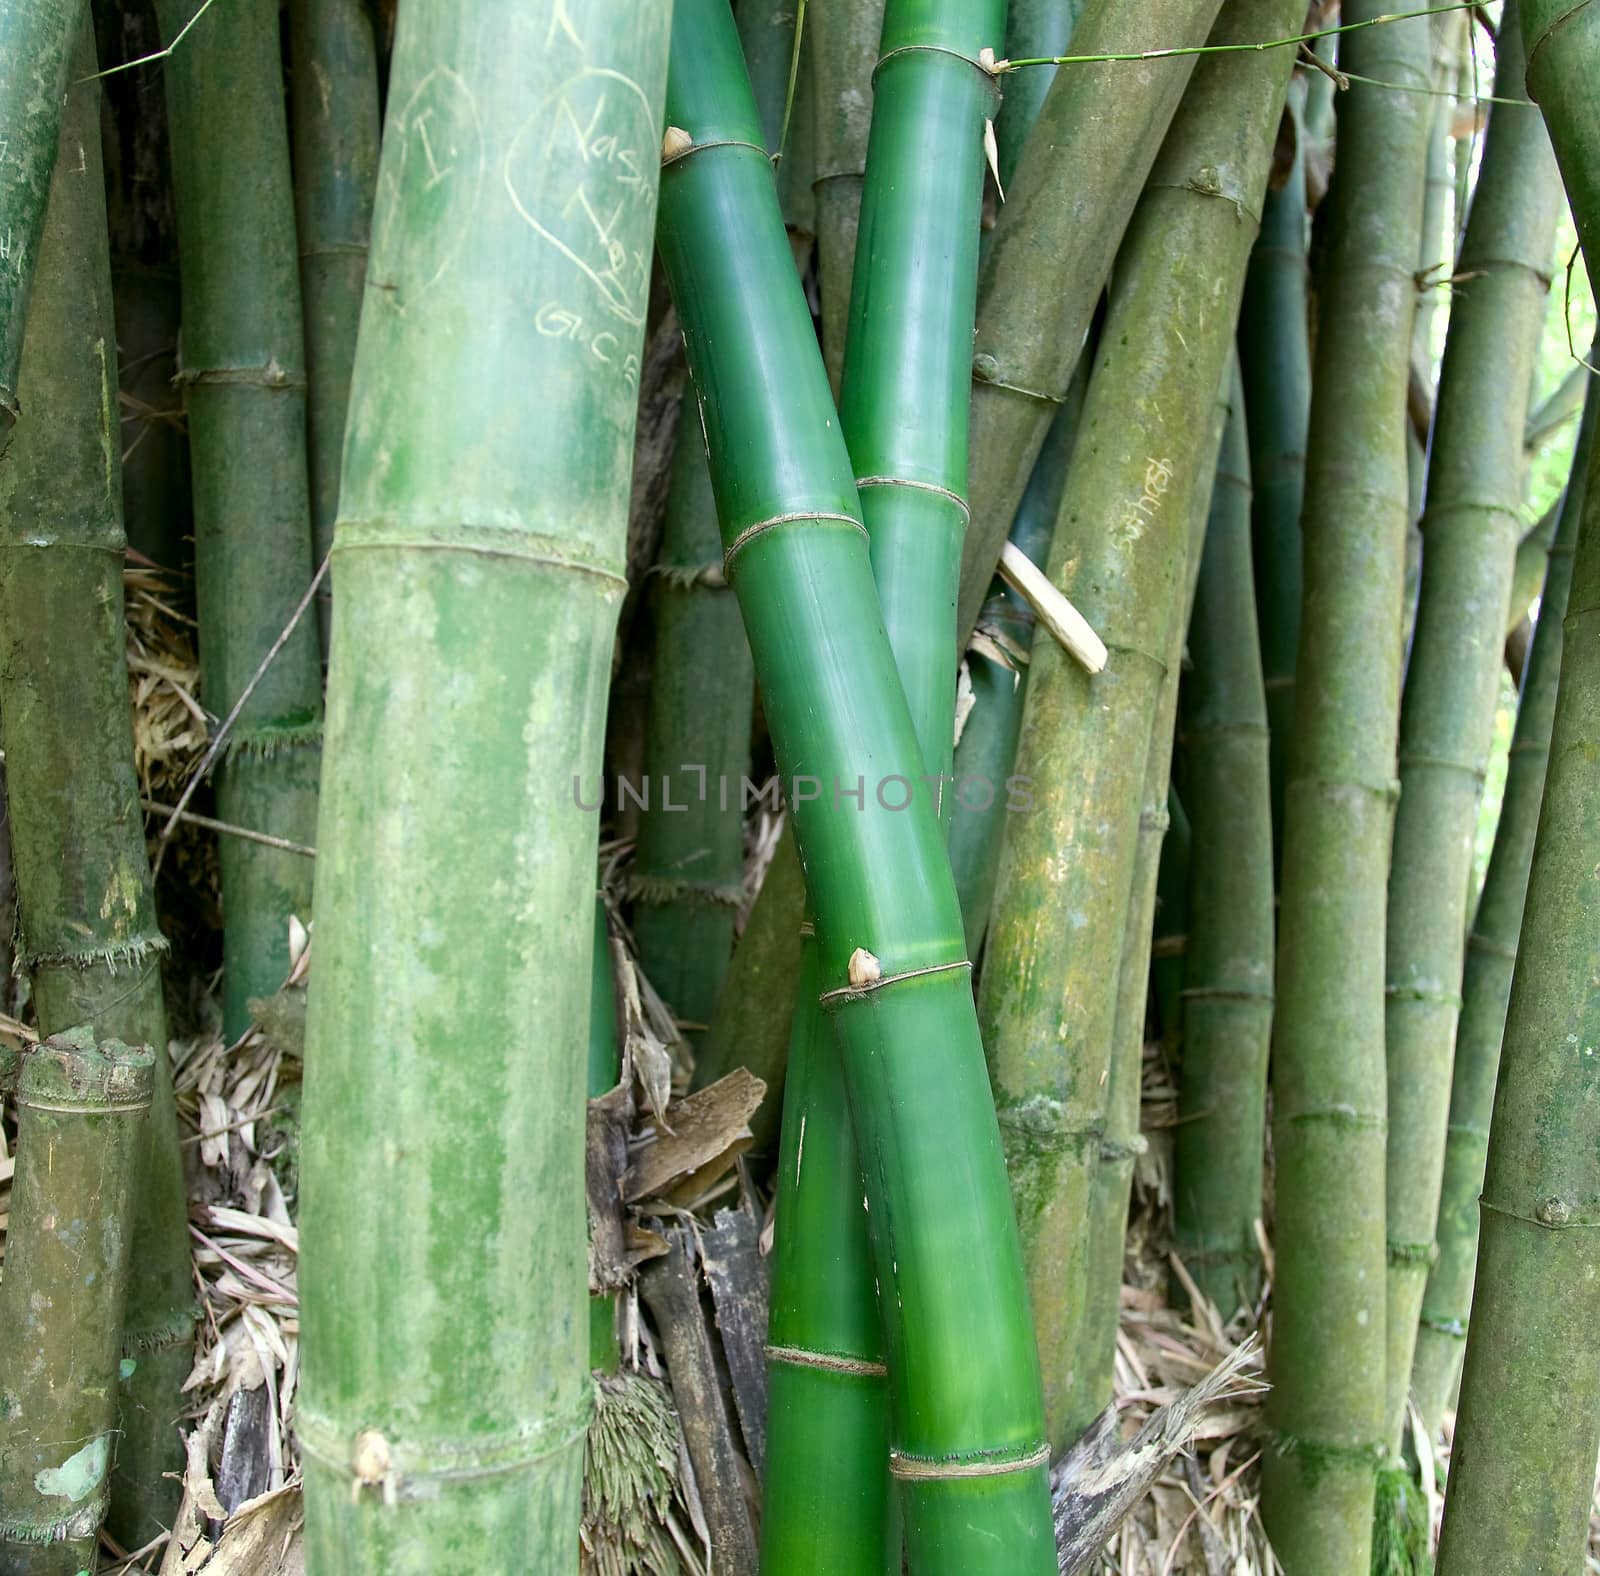 Canes of giant bamboo in the Royal Botanical Gardens, Peradeniya, Kandy, Sri Lanka 